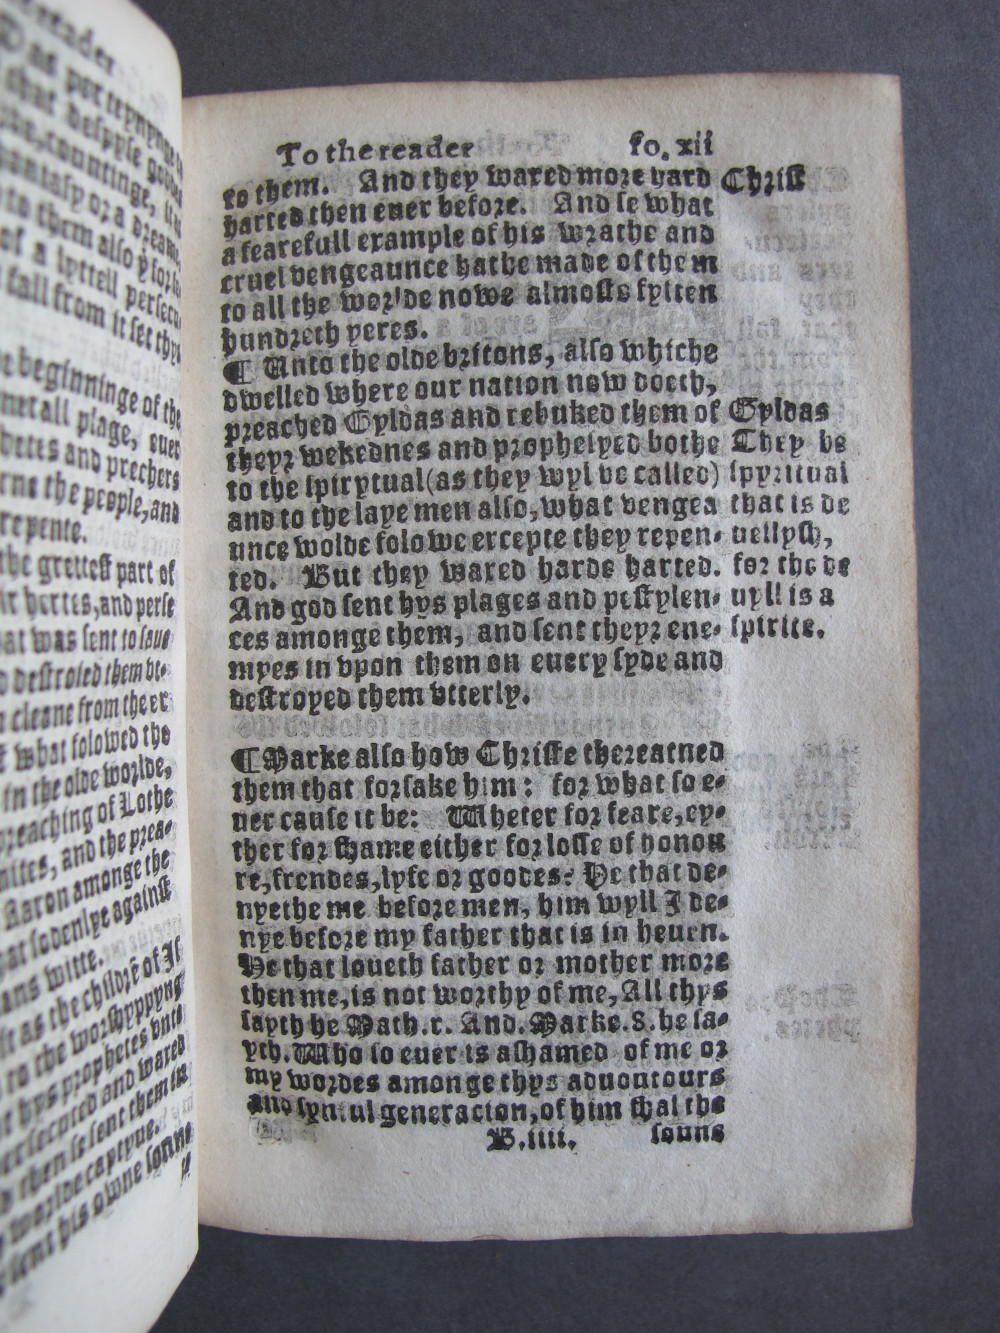 1 Folio B4 recto